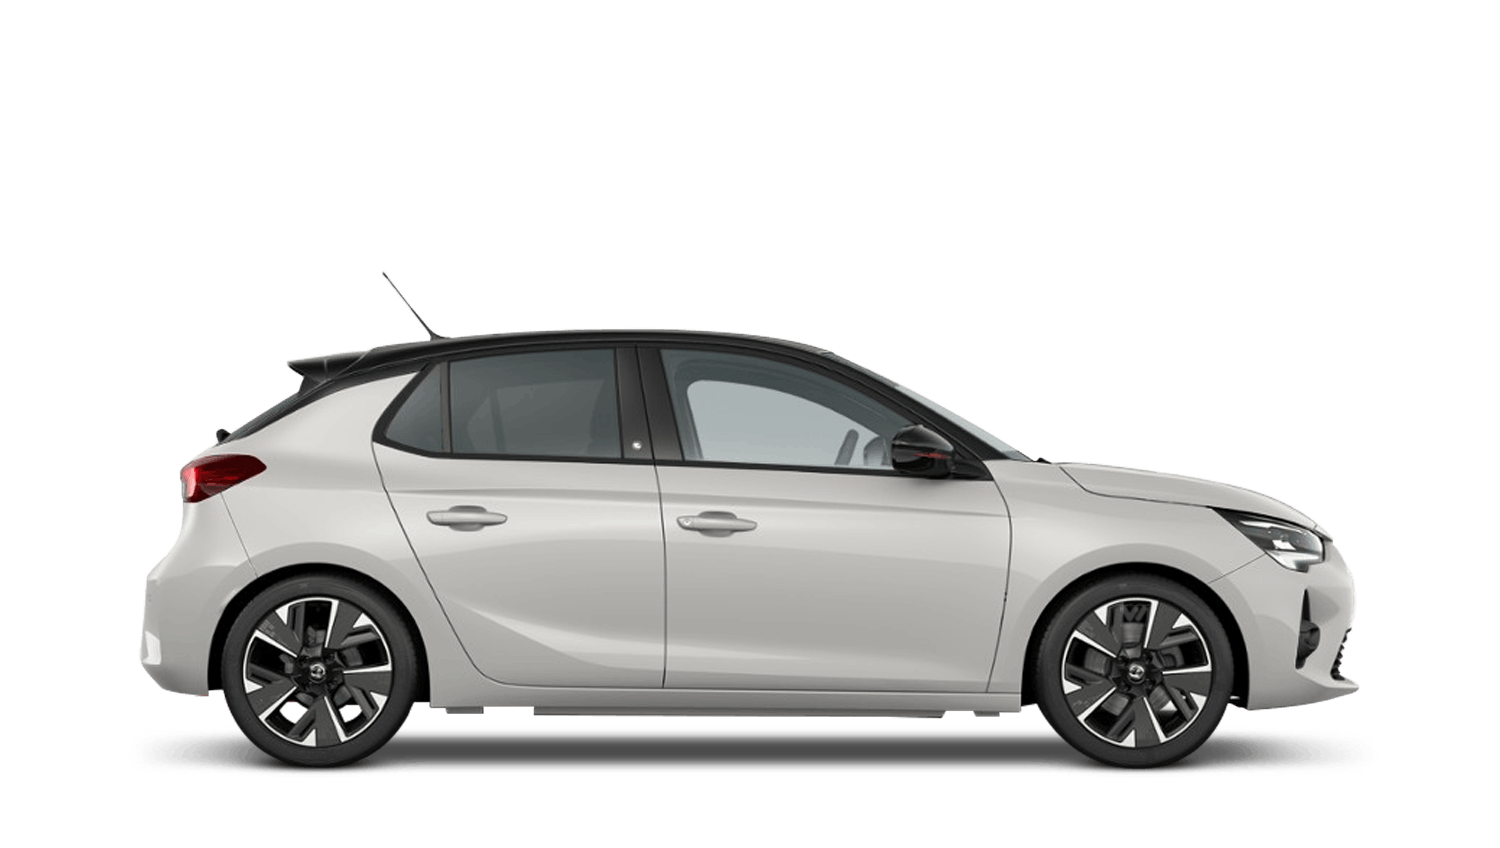  Corsa-e New Electric Car Offers